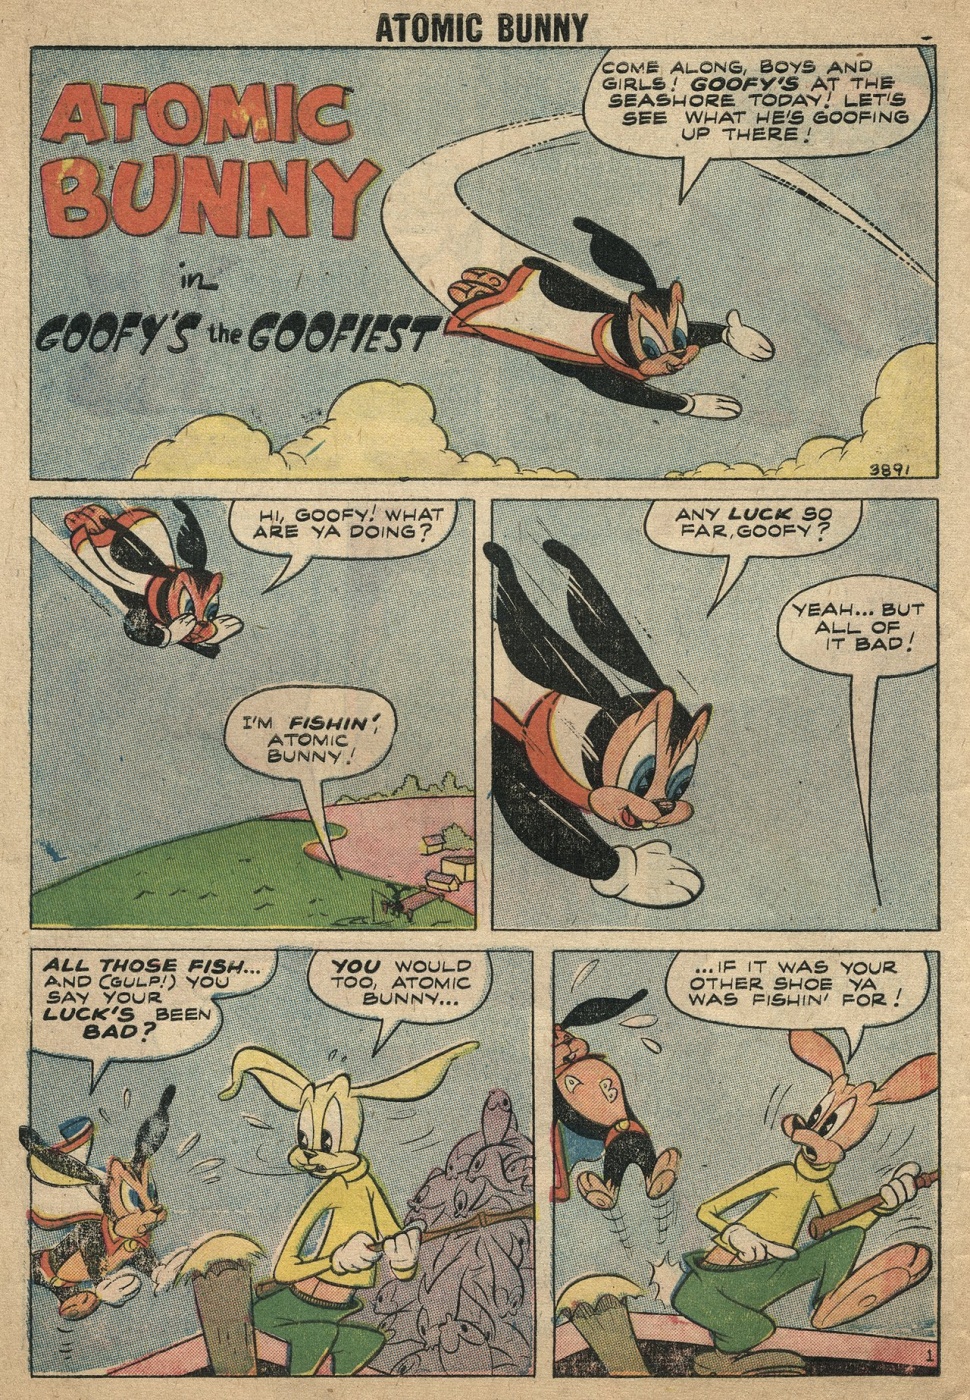 Atomic-Bunny-Comic-Strips (10)